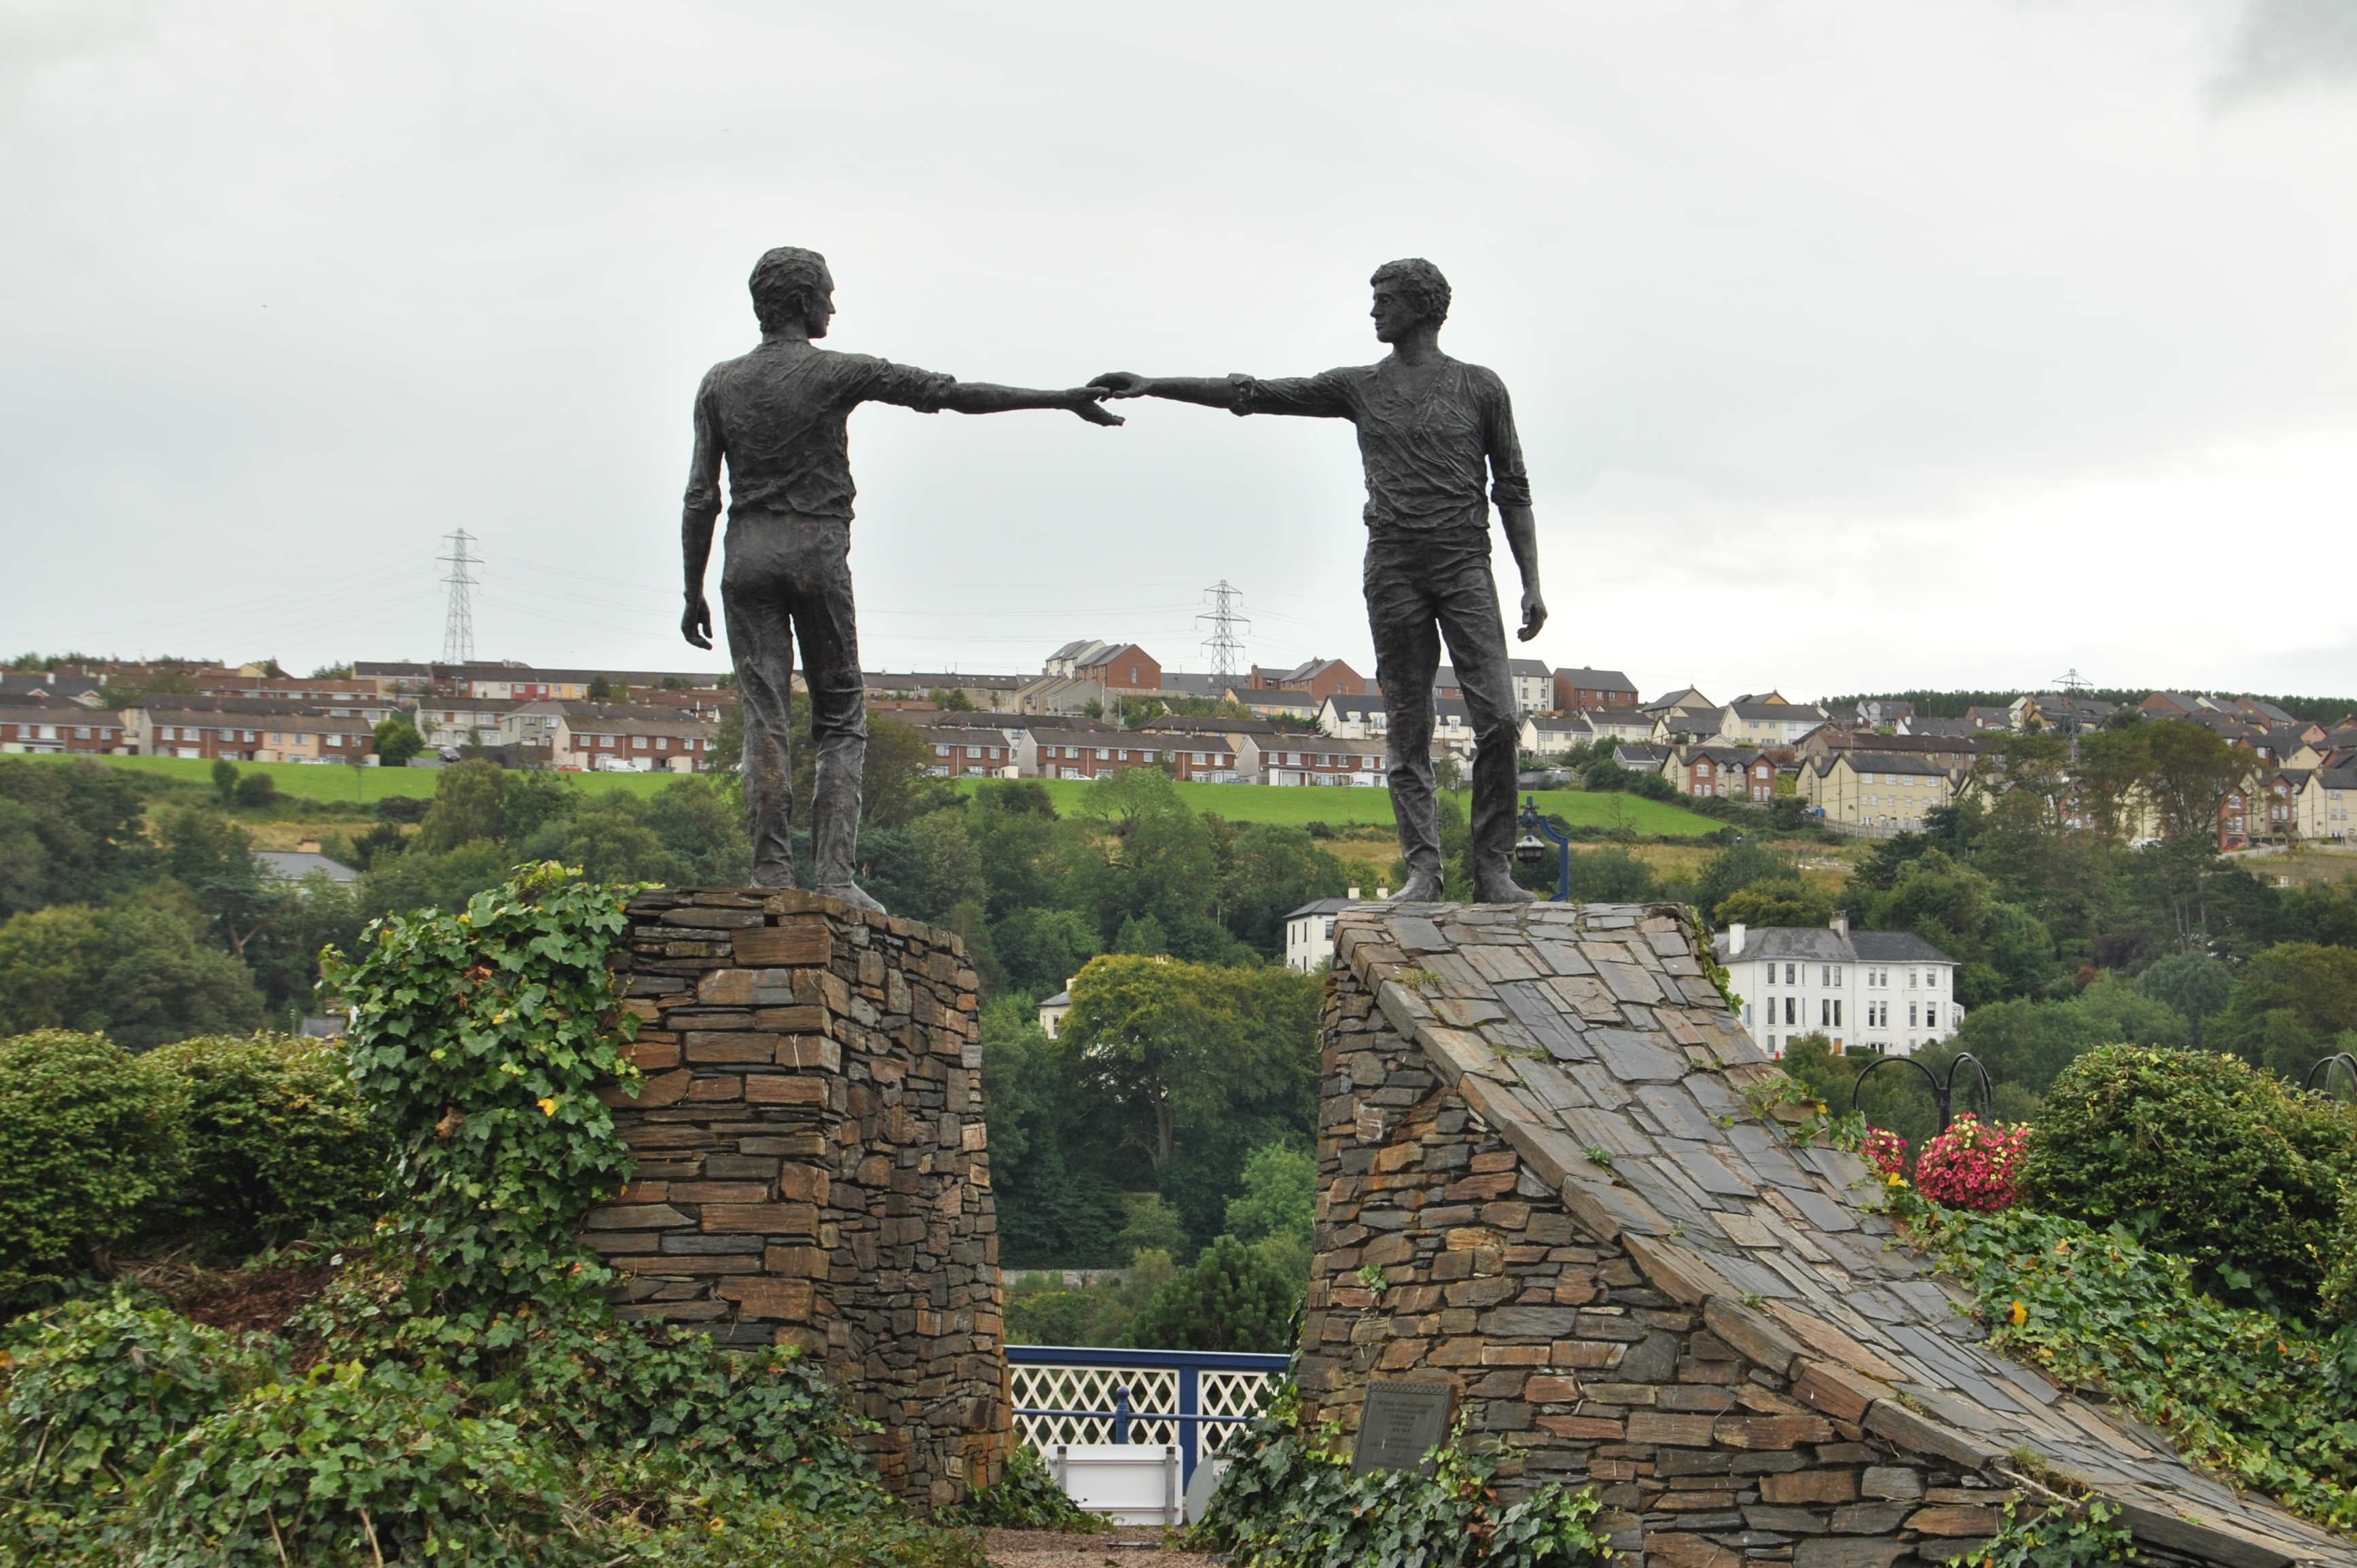 BFB180330 Hands Across the Divide - Derry Sculpture